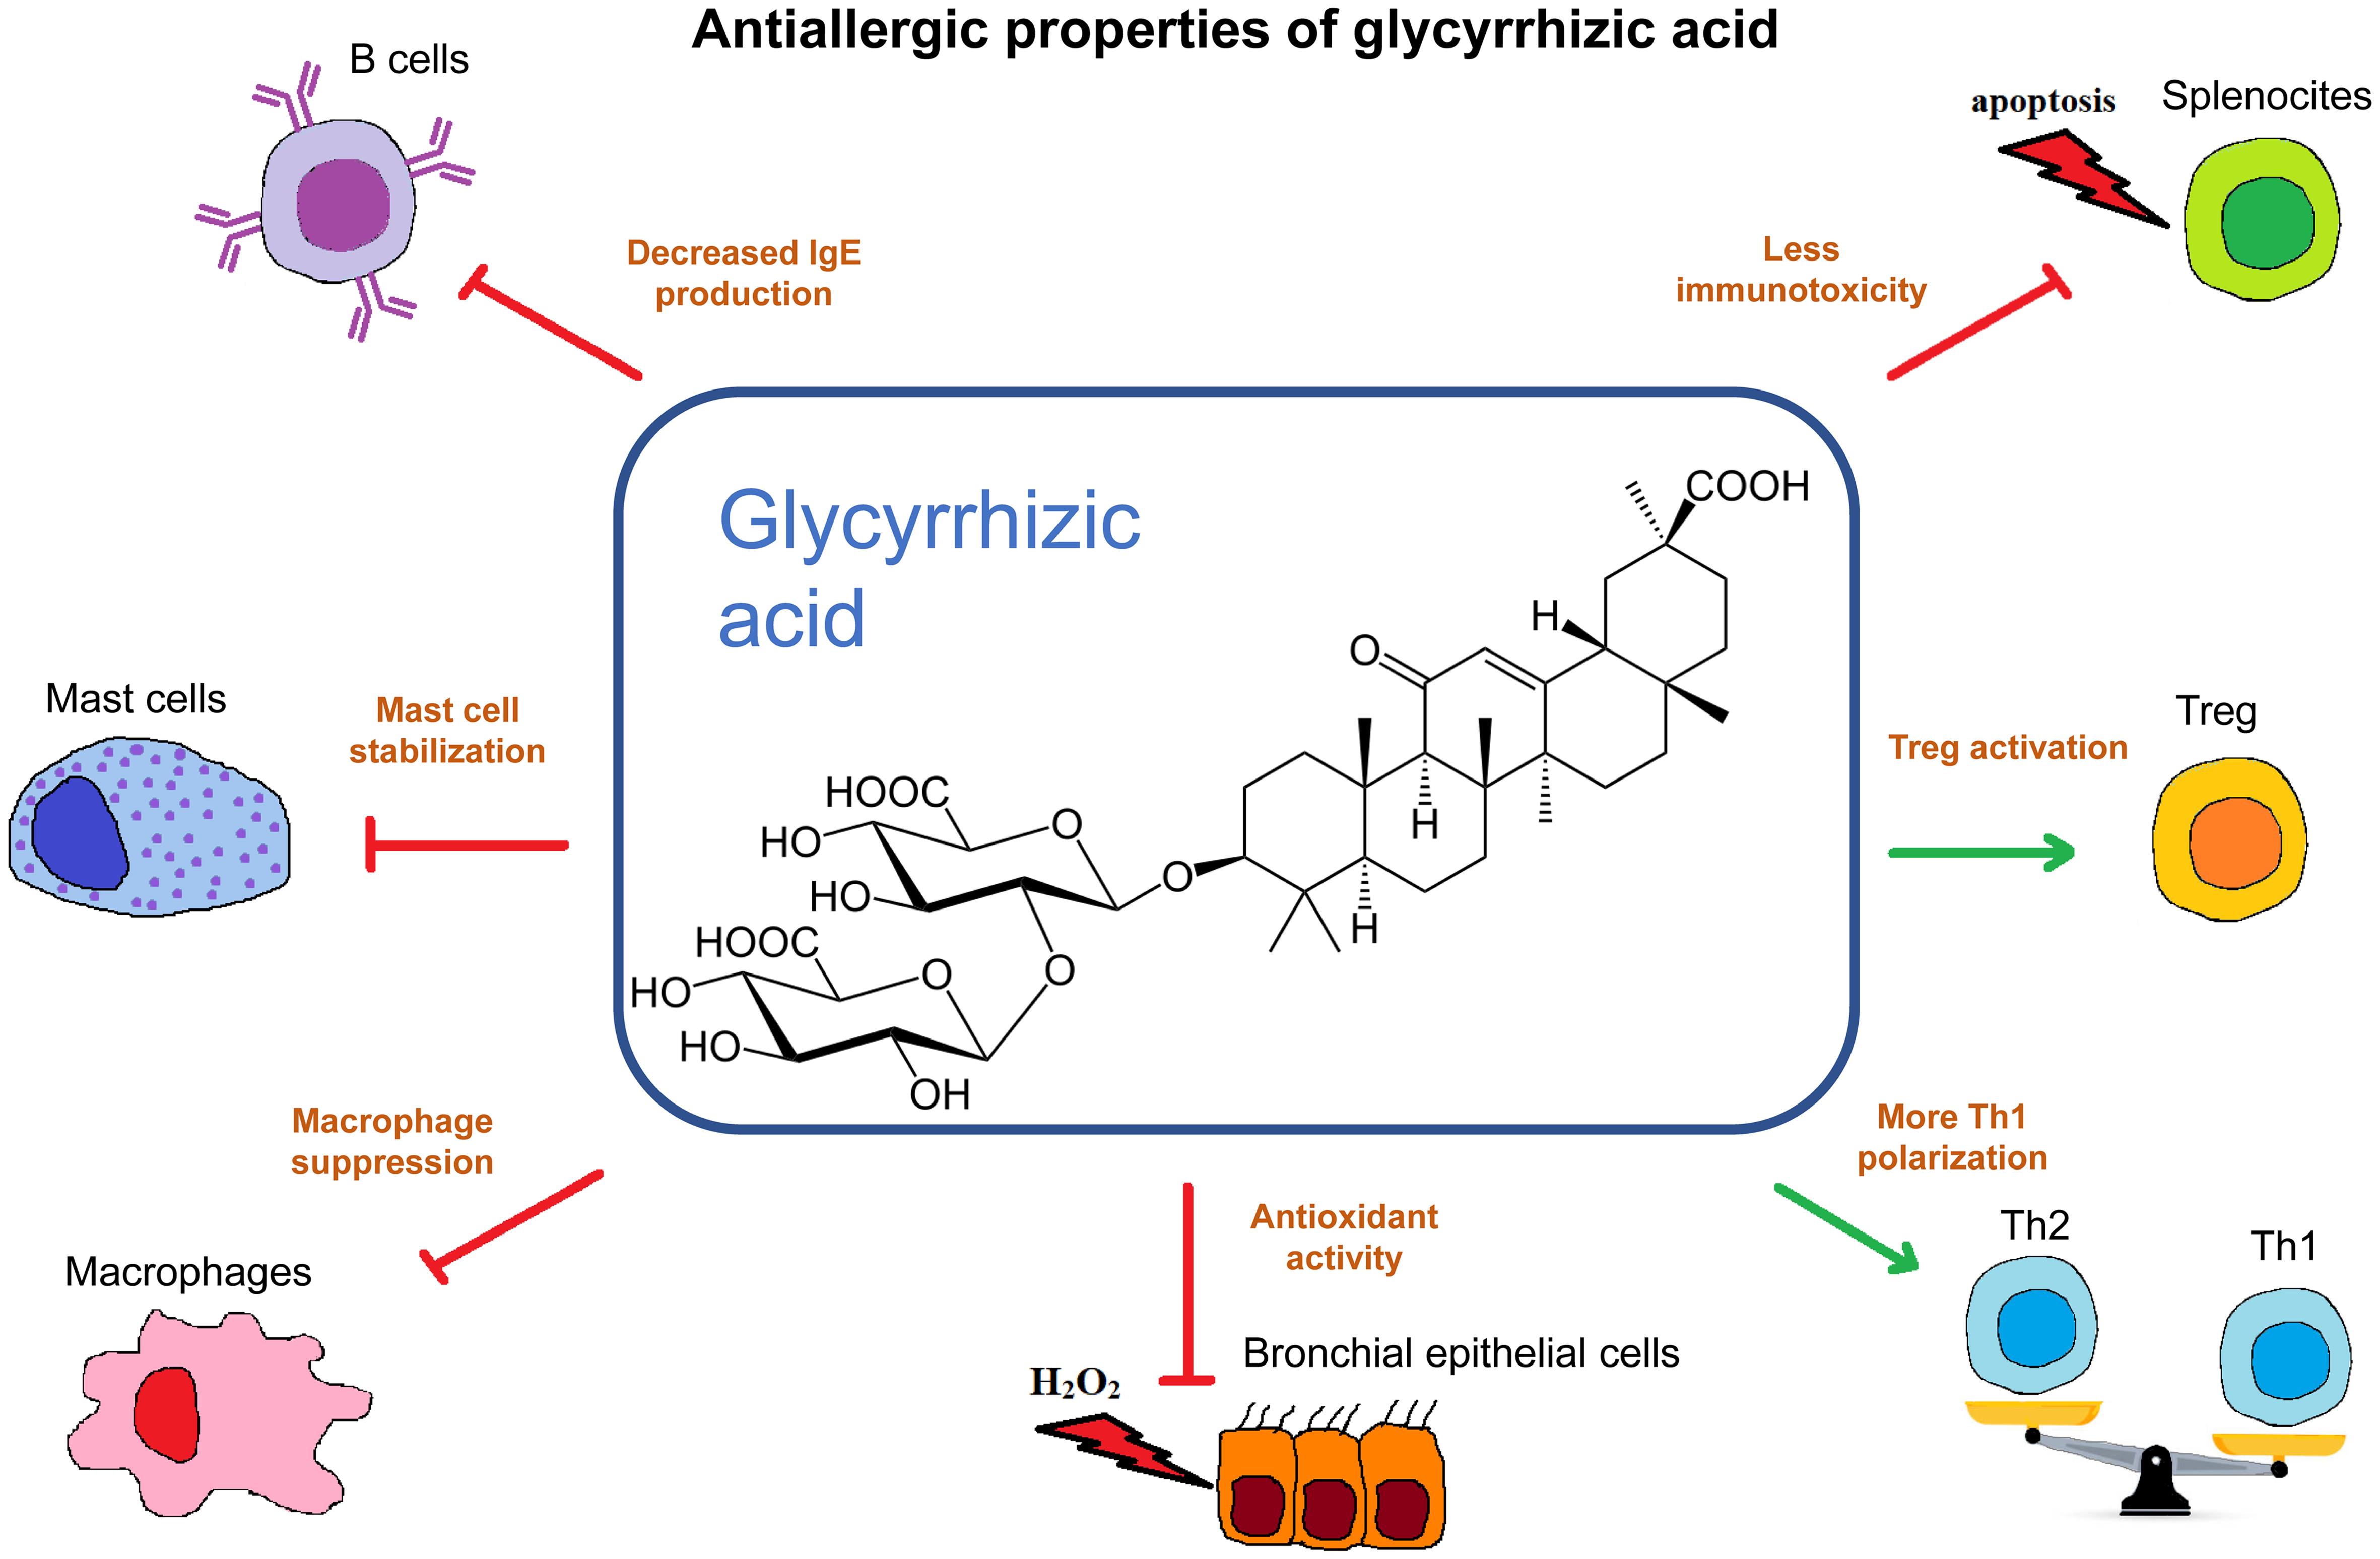 Antiallergic properties of glycyrrhizic acid.